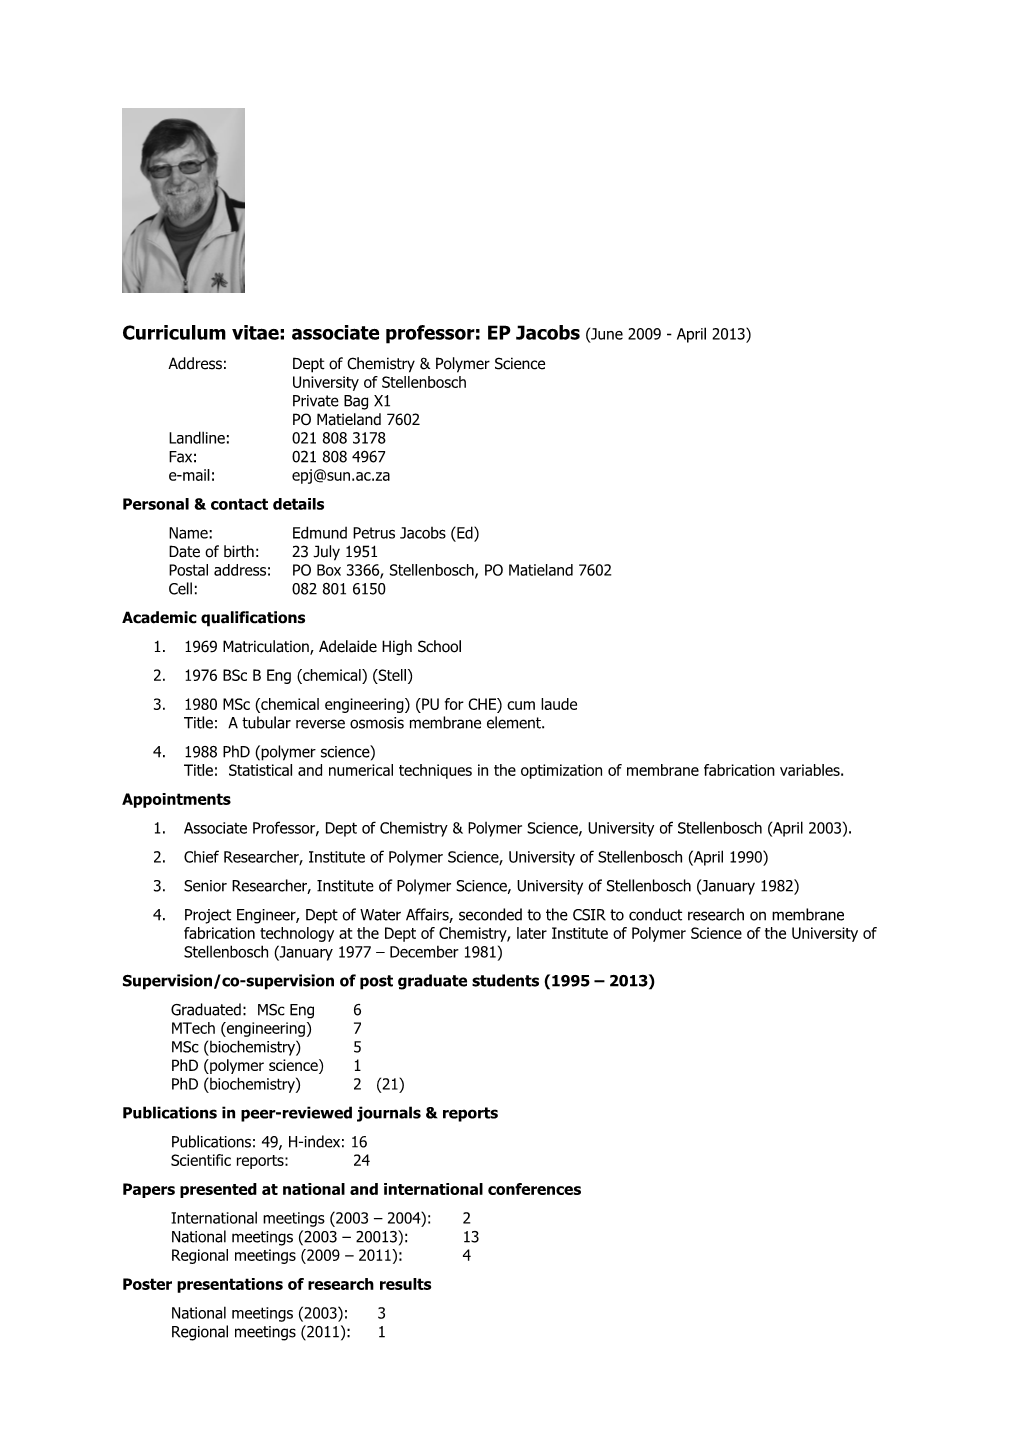 Curriculum Vitae: Associate Professor: EP Jacobs (June 2009- April 2013)